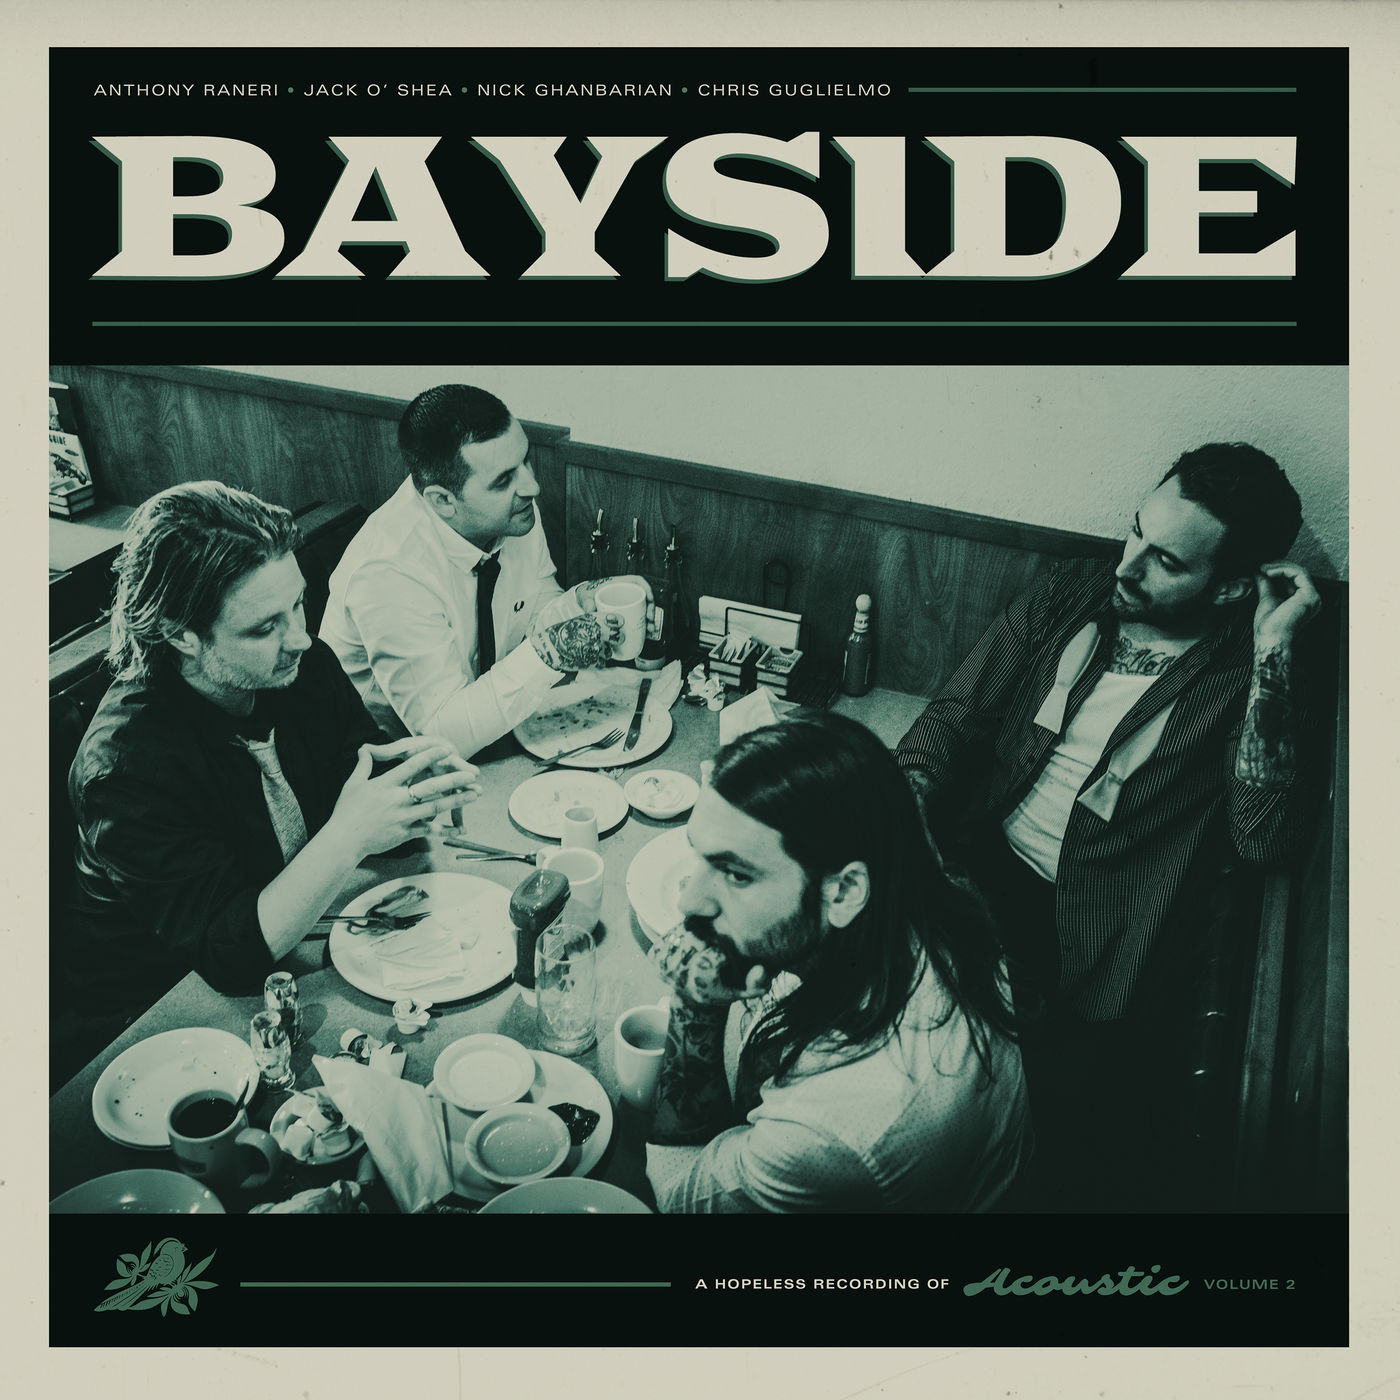 Bayside - Acoustic Volume 2 (2018) Album Info